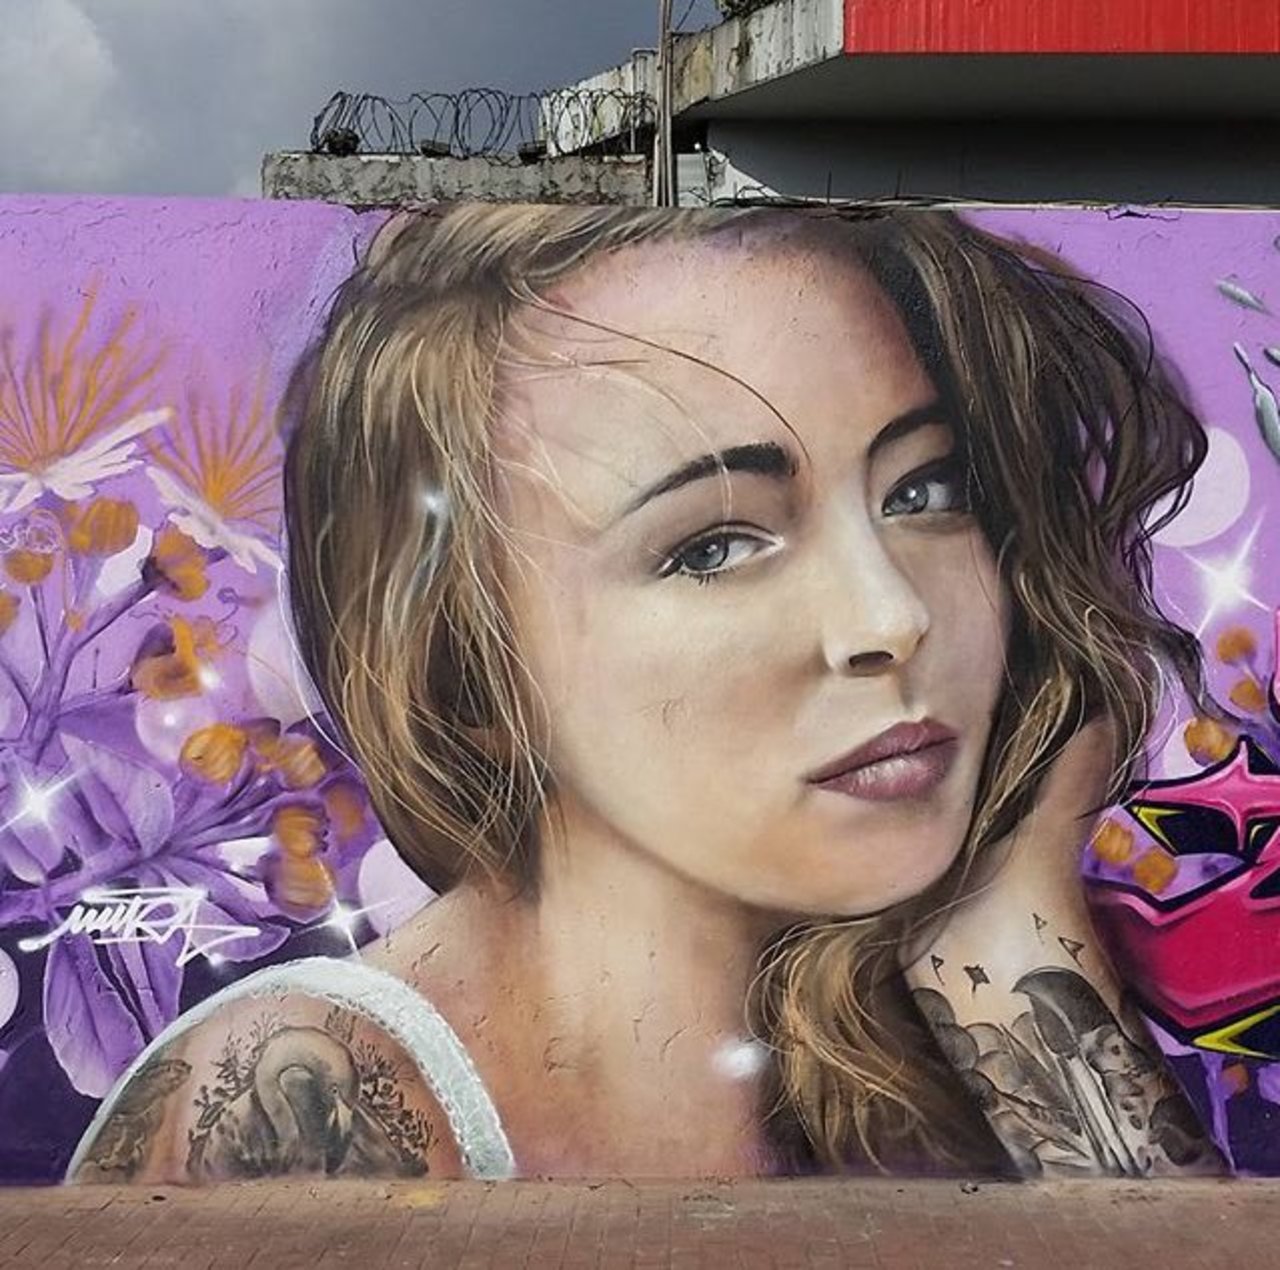 New Street Art by Mantarea 

#art #graffiti #mural #streetart https://t.co/yes99GnZIV